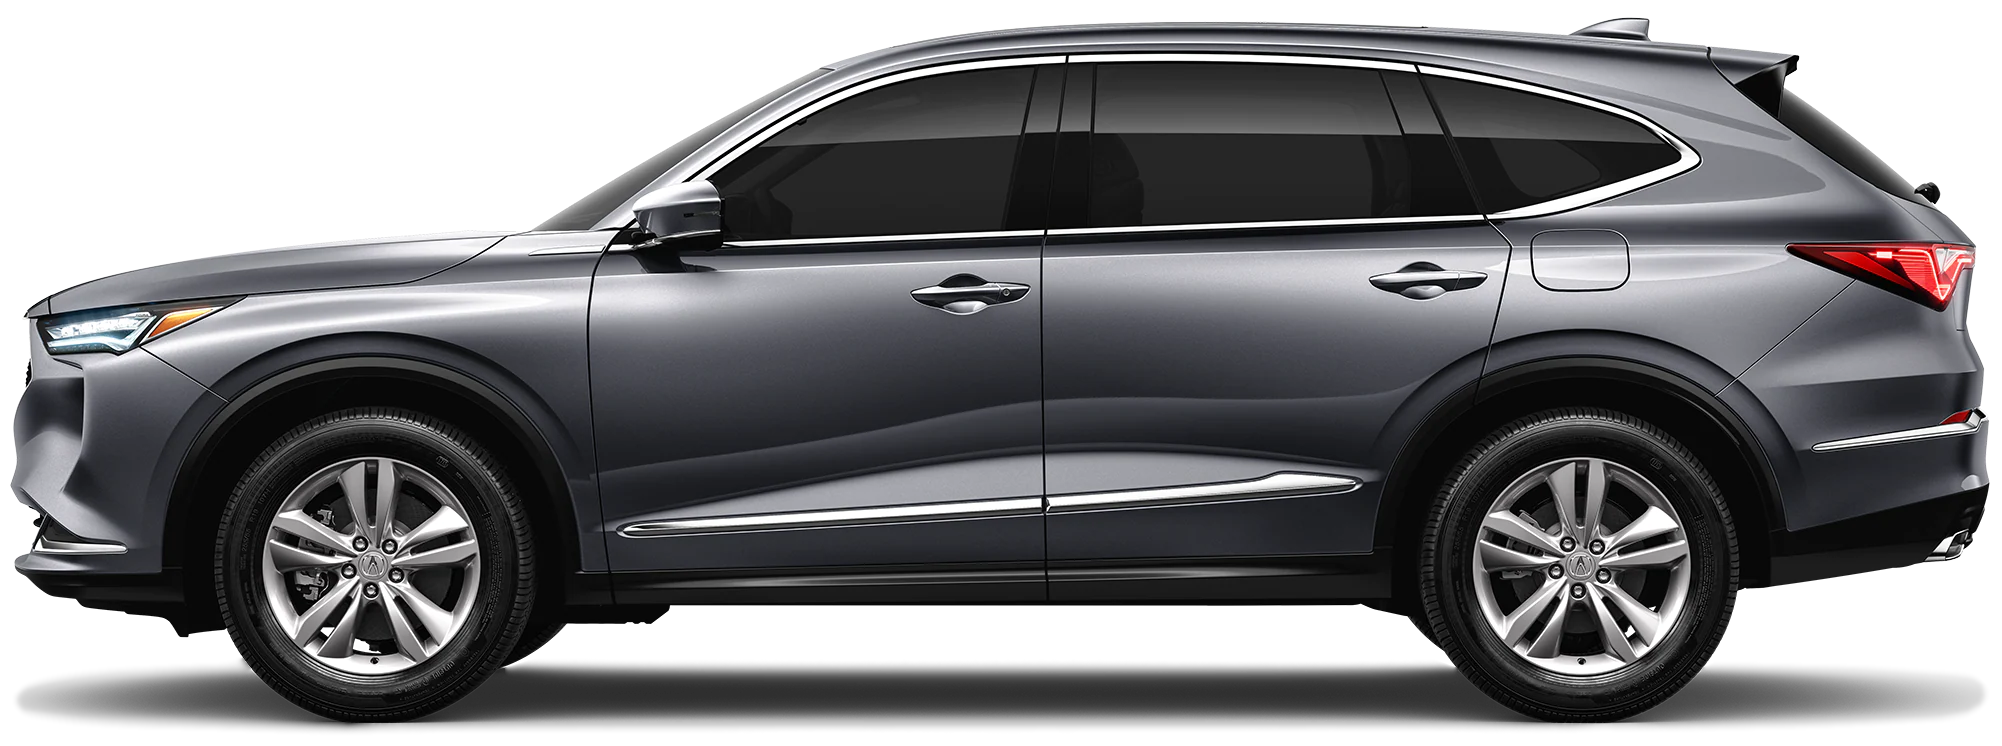 Acura MDX exterior - Side Profile